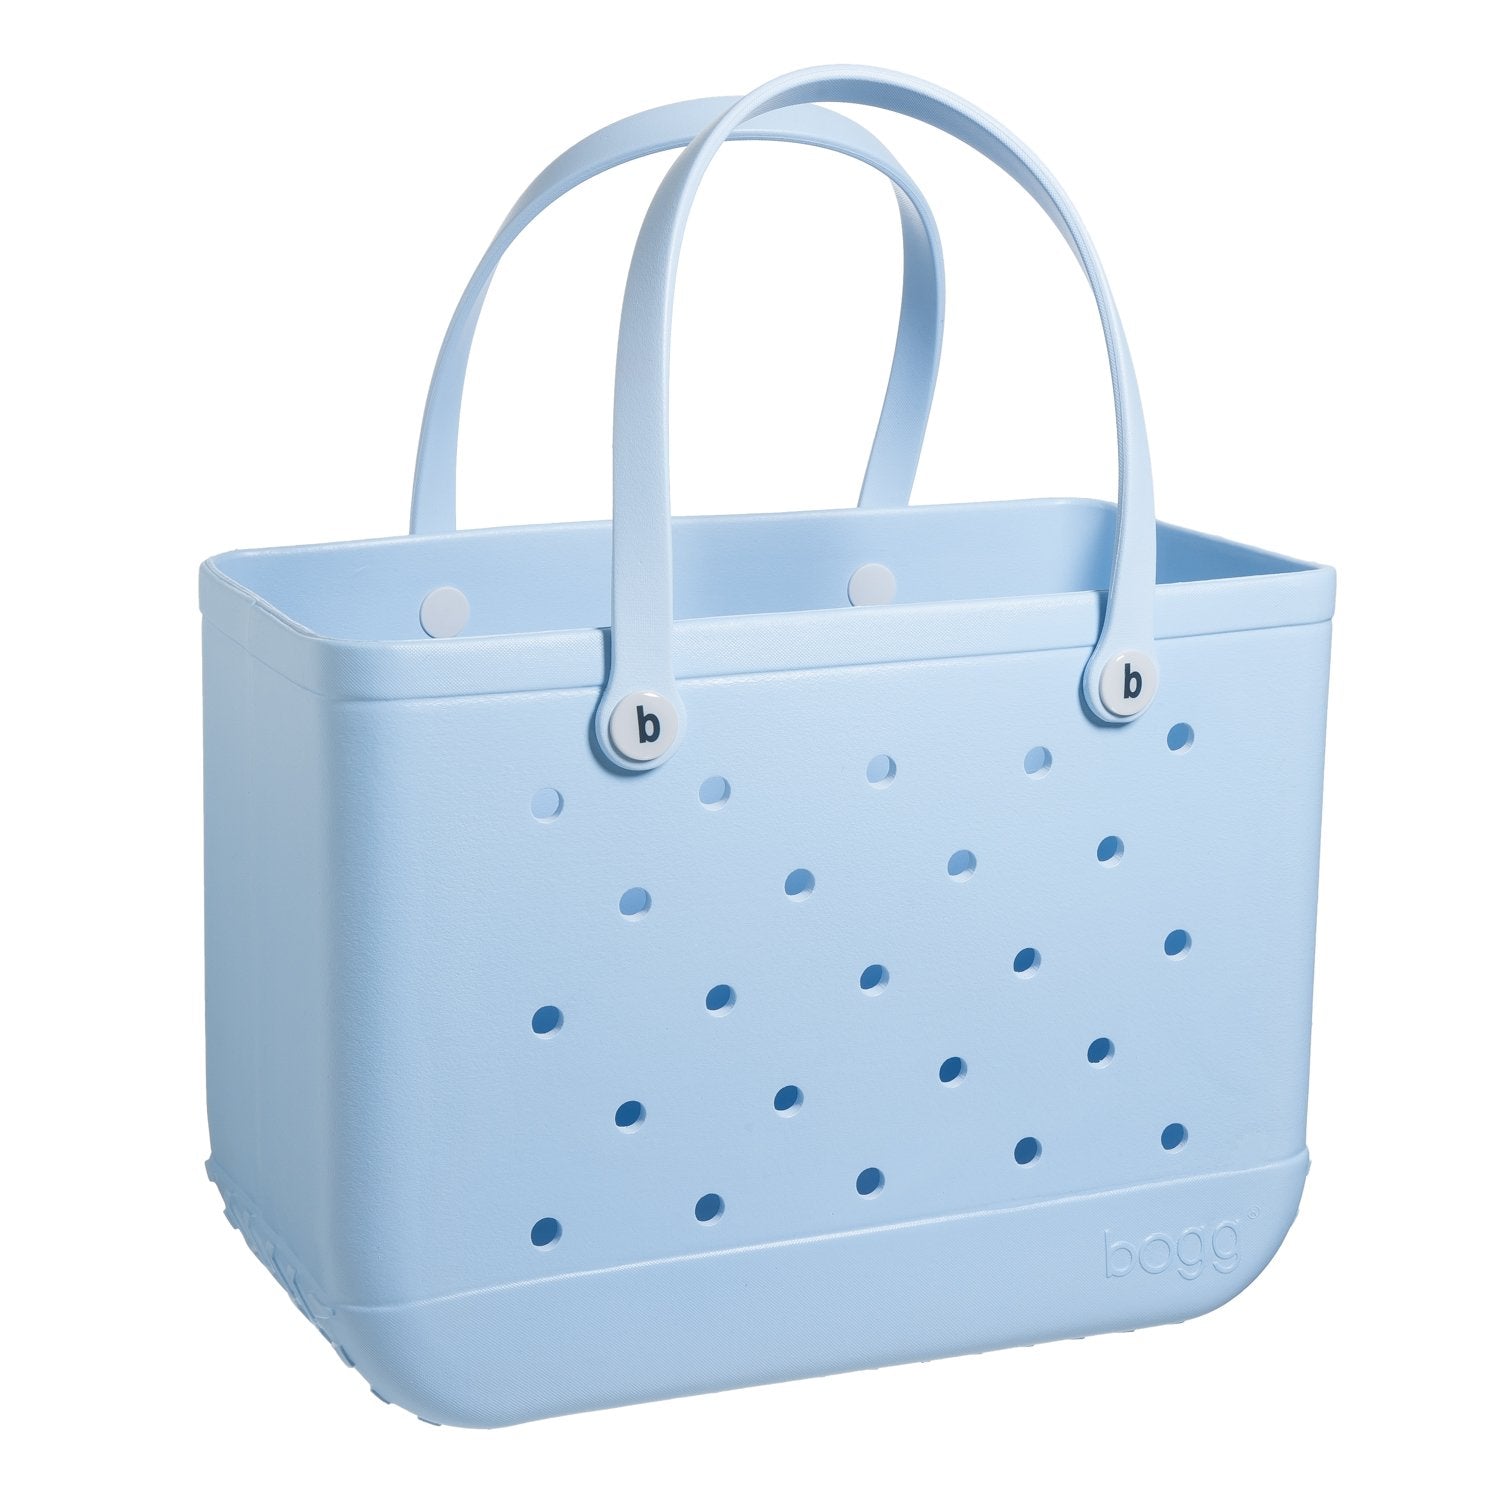 Original Bogg Bag in Carolina Blue